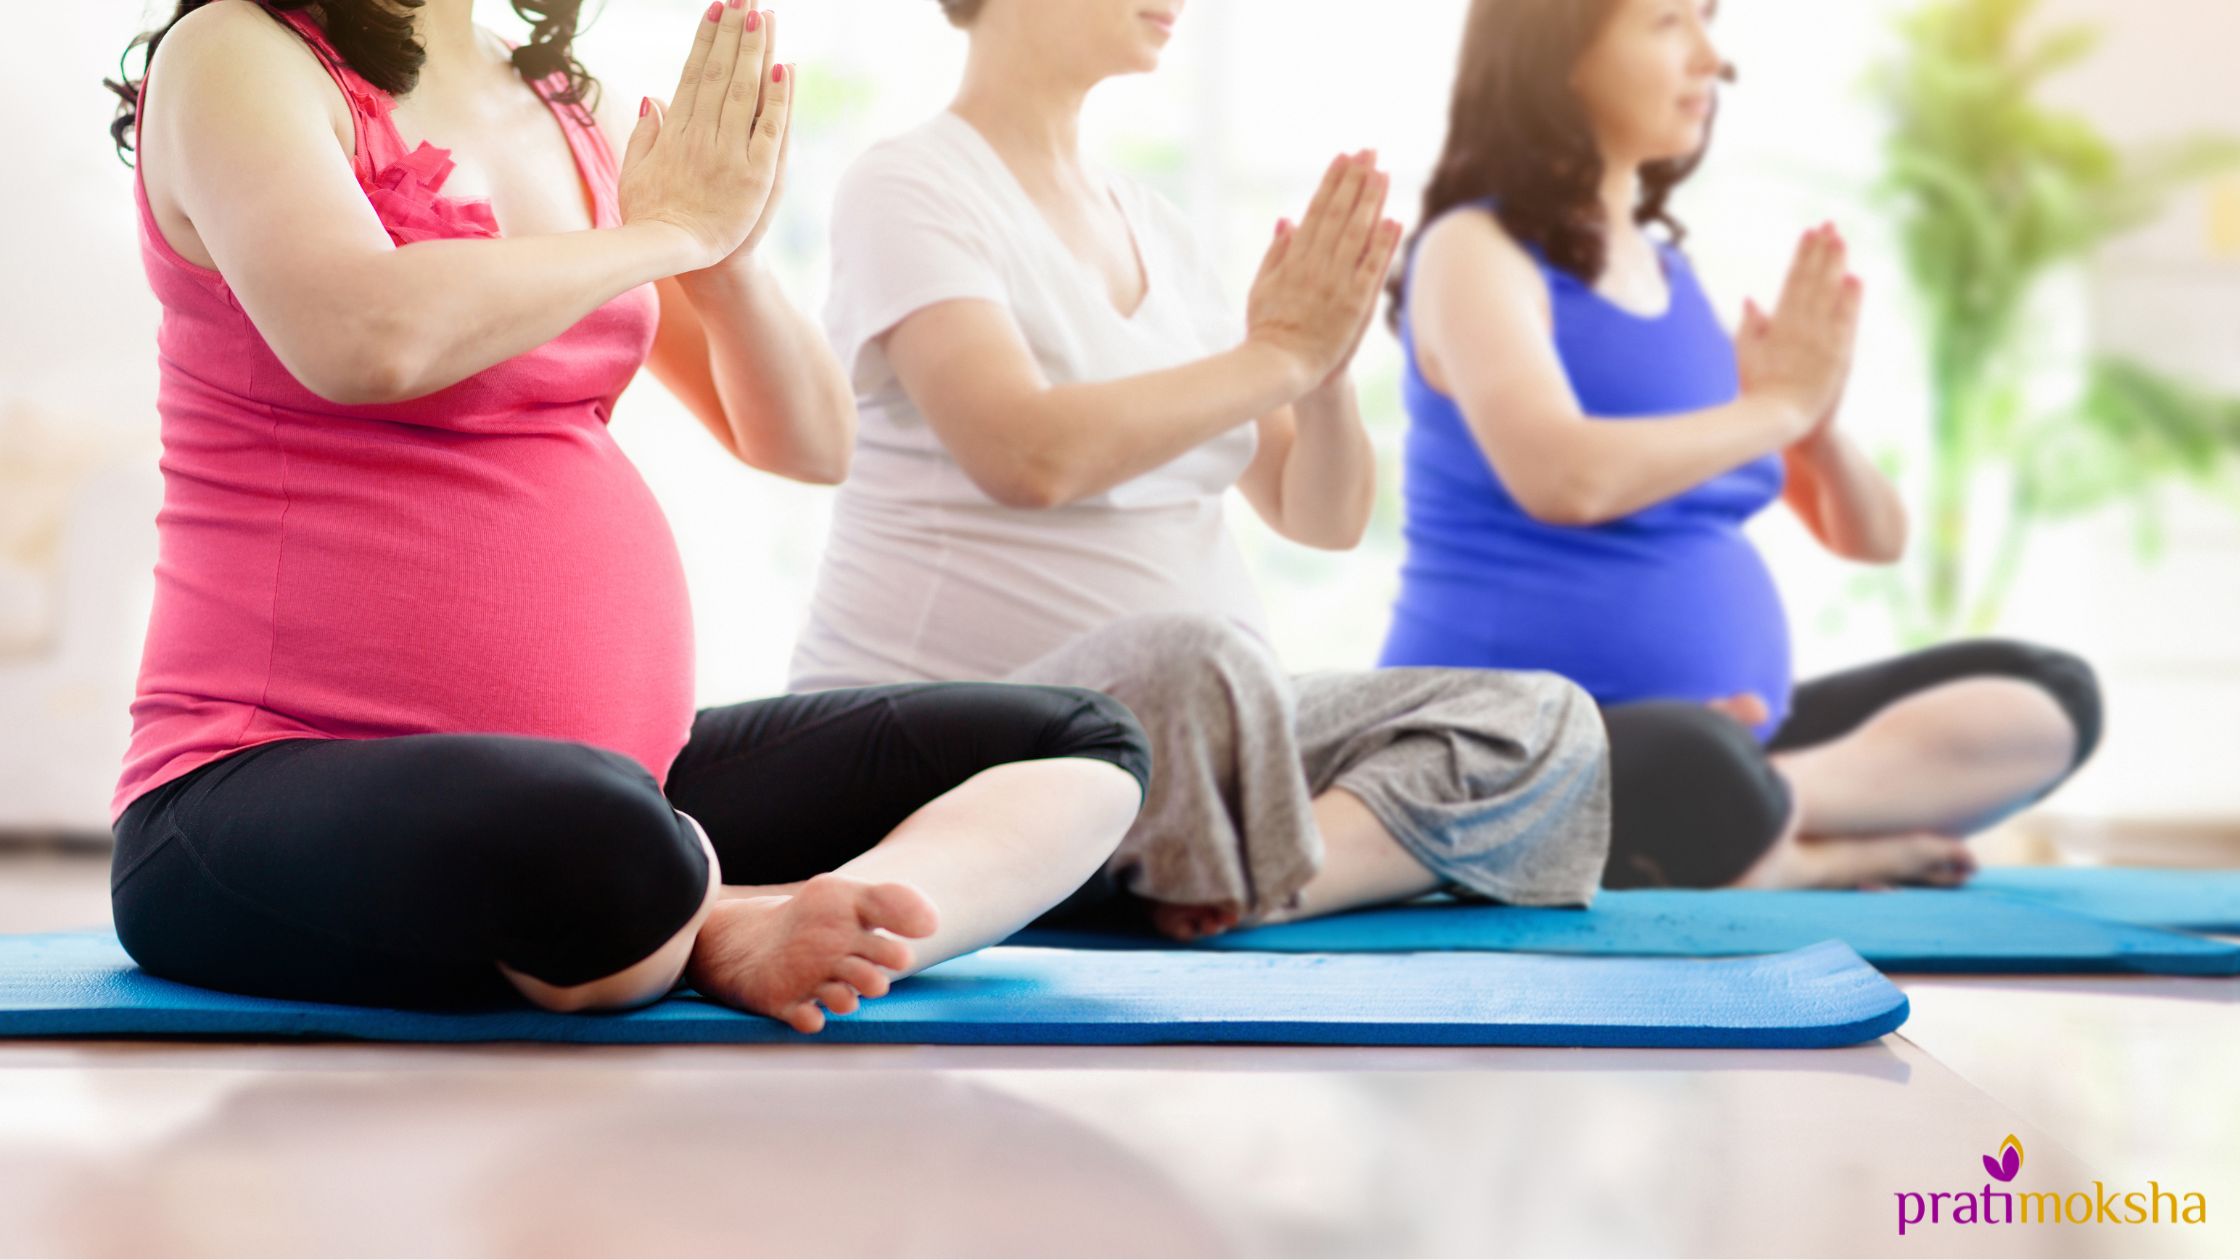 Why Yoga during pregnancy - Dubai - Oud Metha - Pratimoksha - Enlighten ...